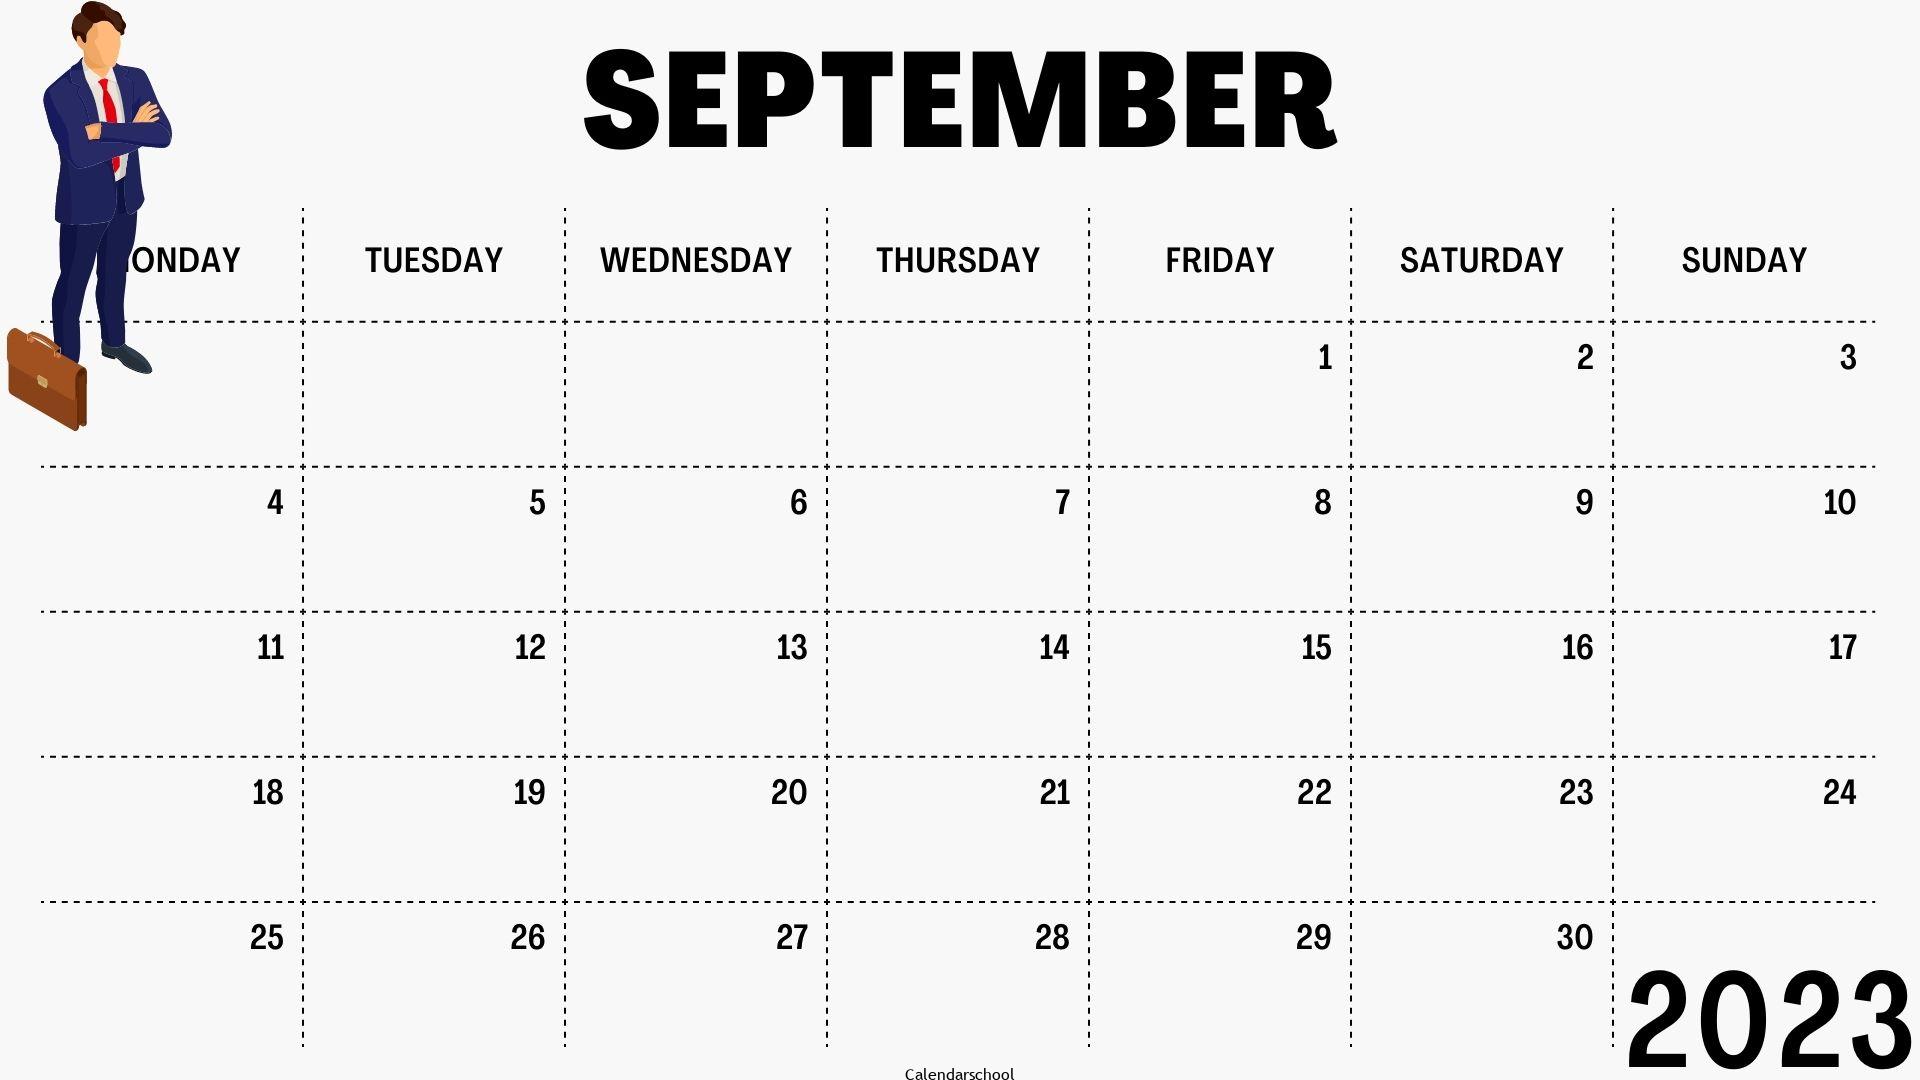 September 2023 Calendar With Festivals